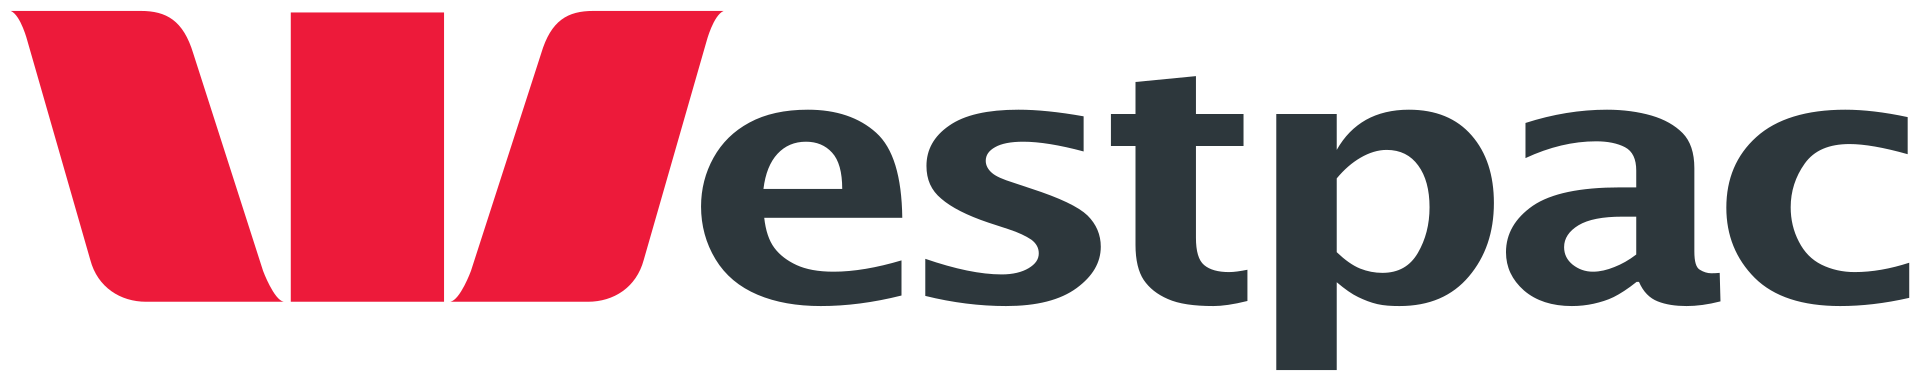 Westpac Bank Logo